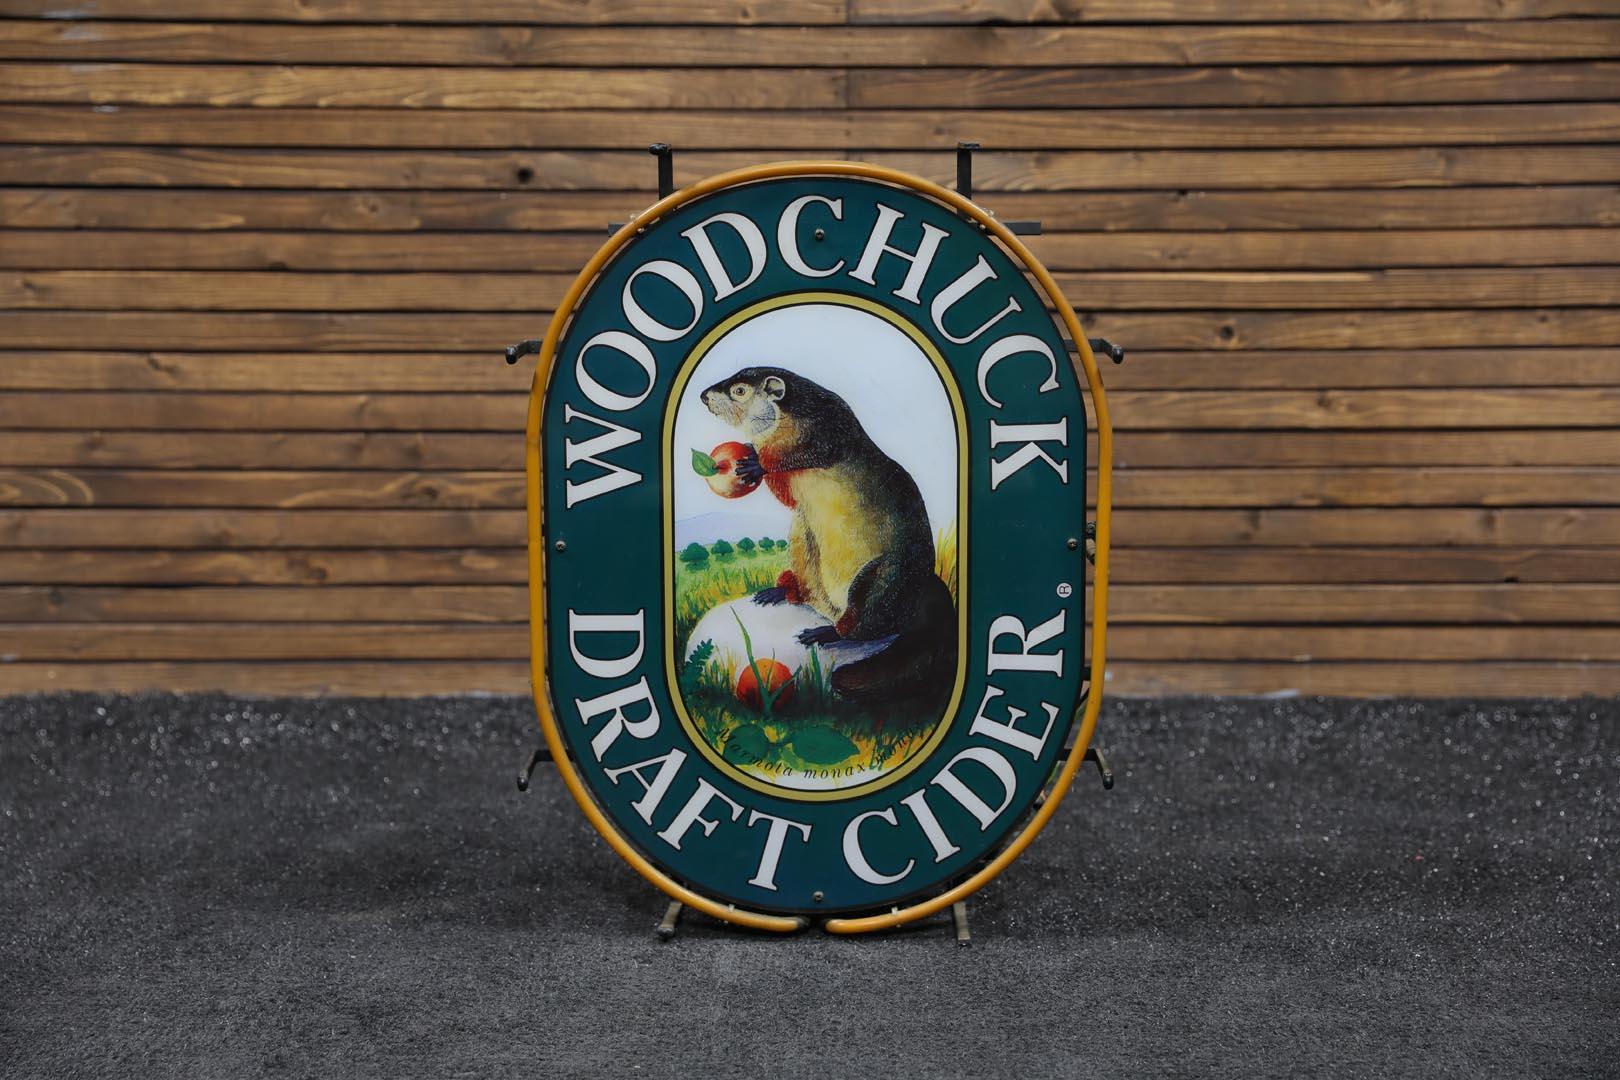 Woodchuck Draft Cider Neon Sign